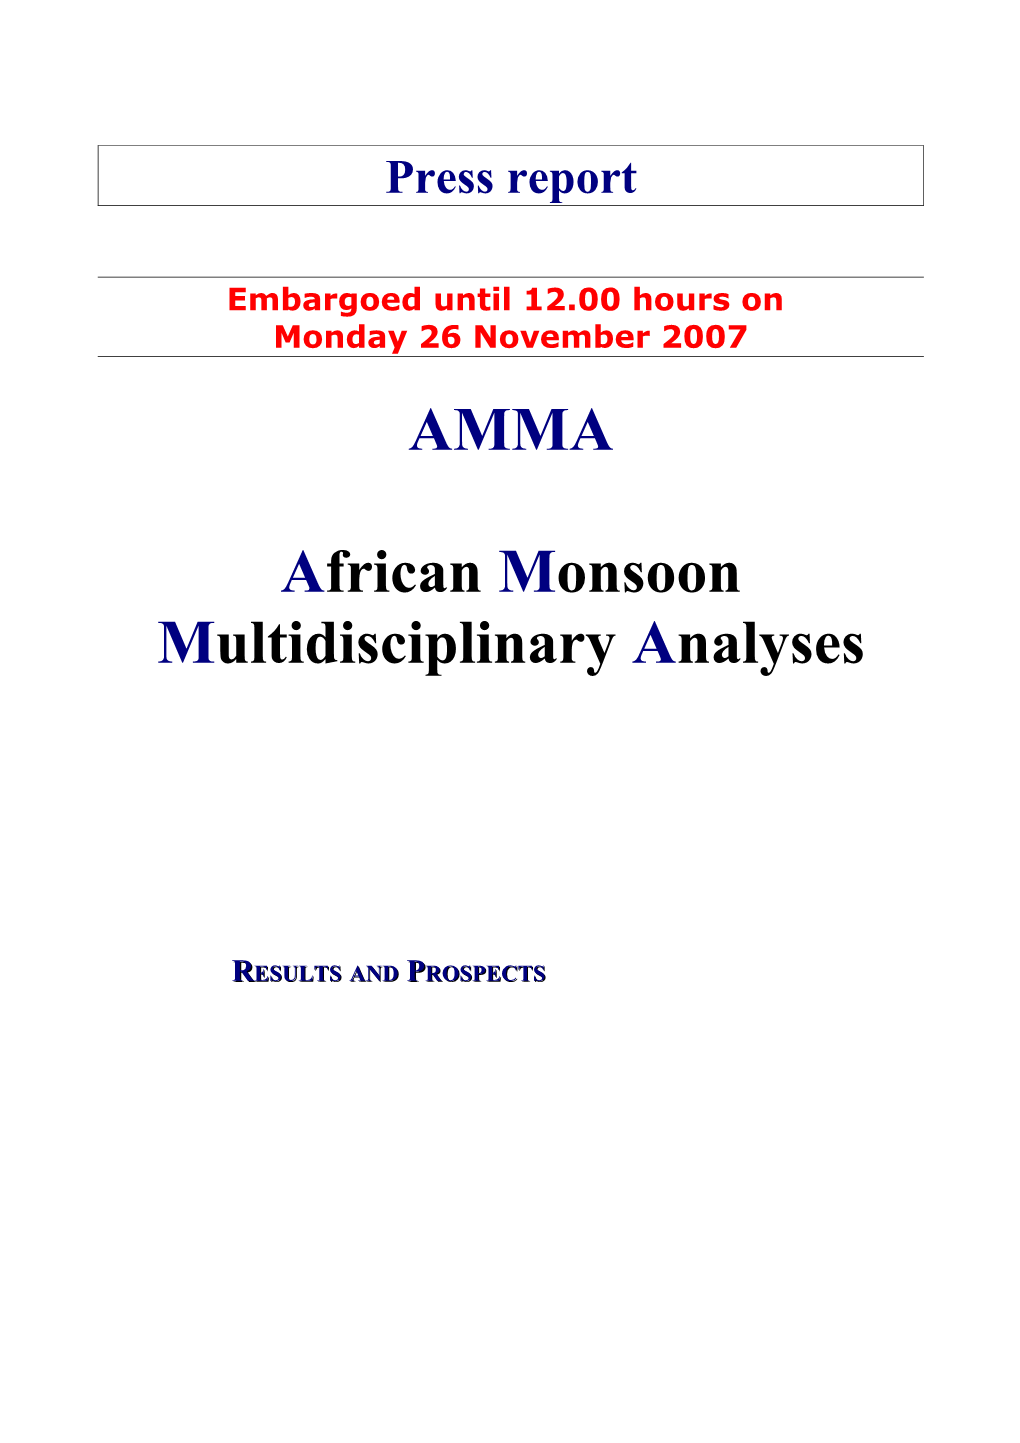 African Monsoon Multidisciplinary Analyses